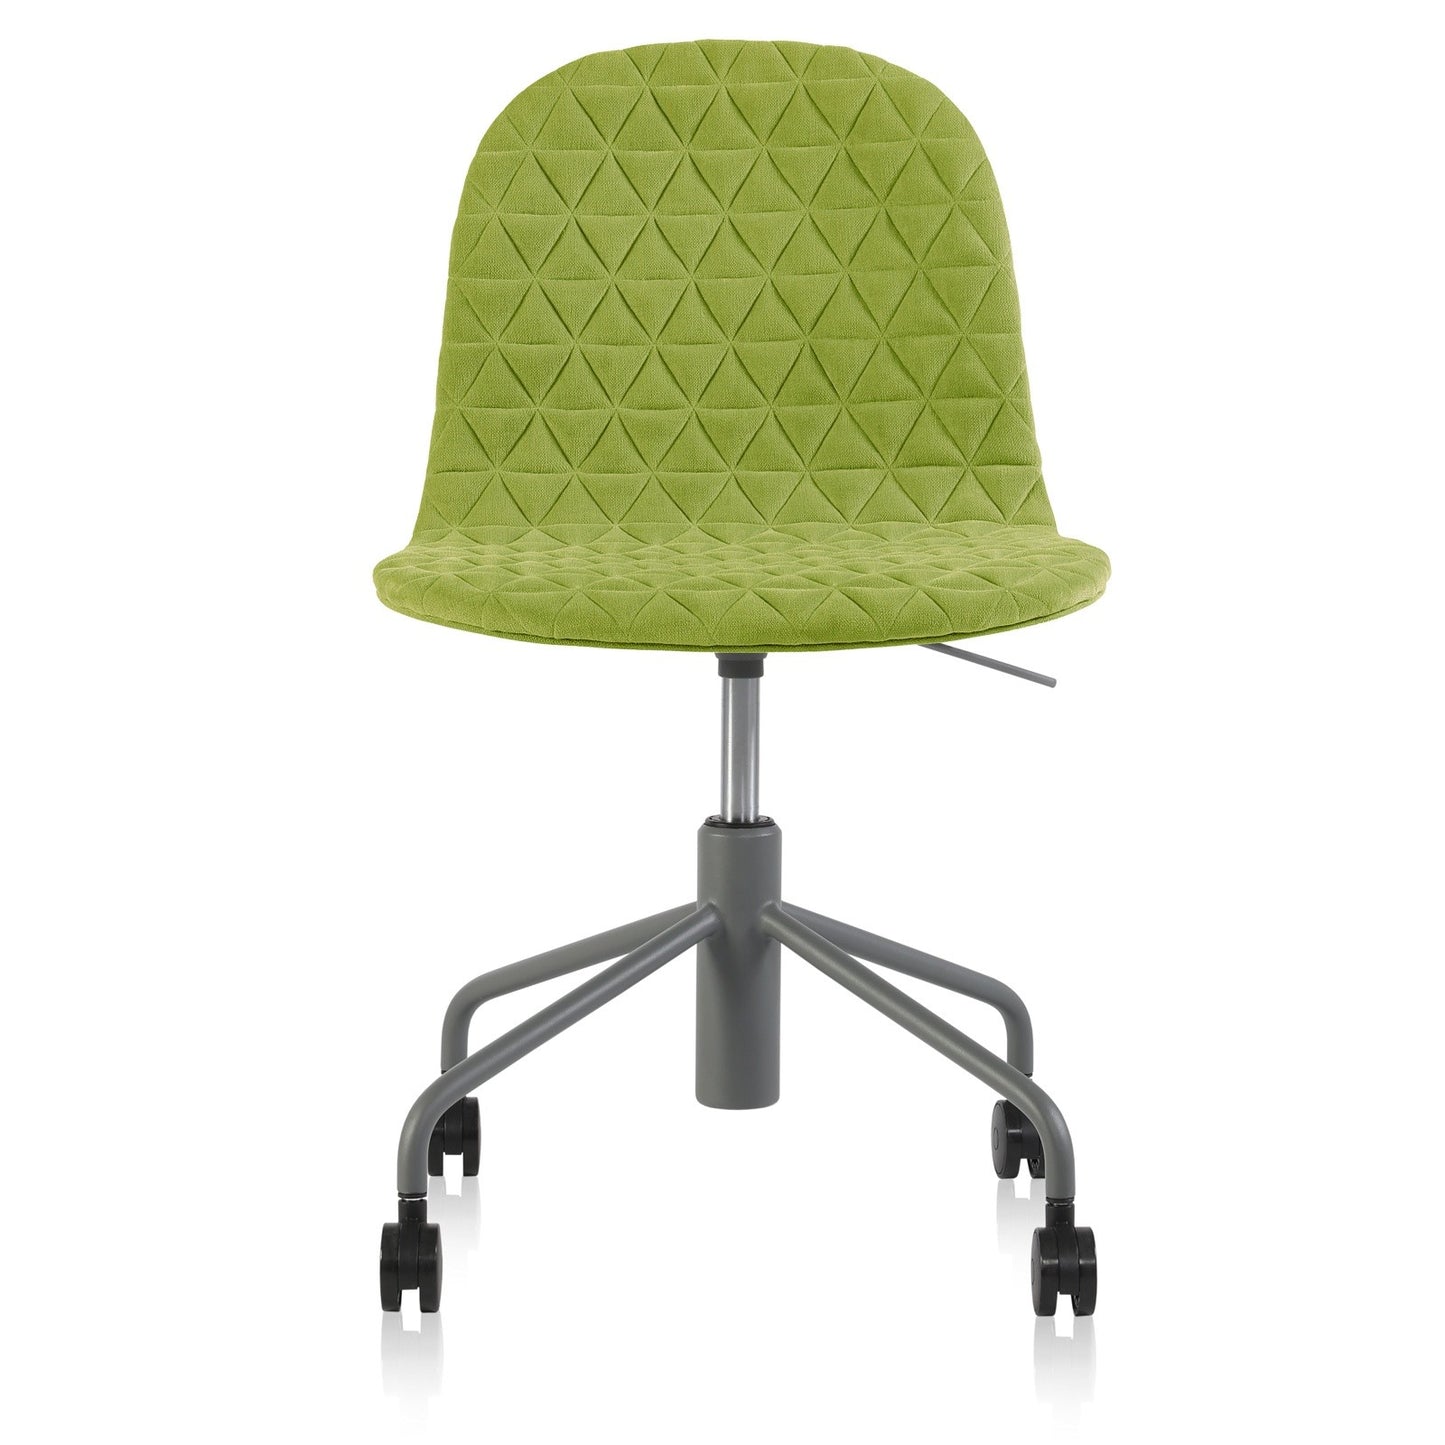 Chair Mannequin 06 - Green